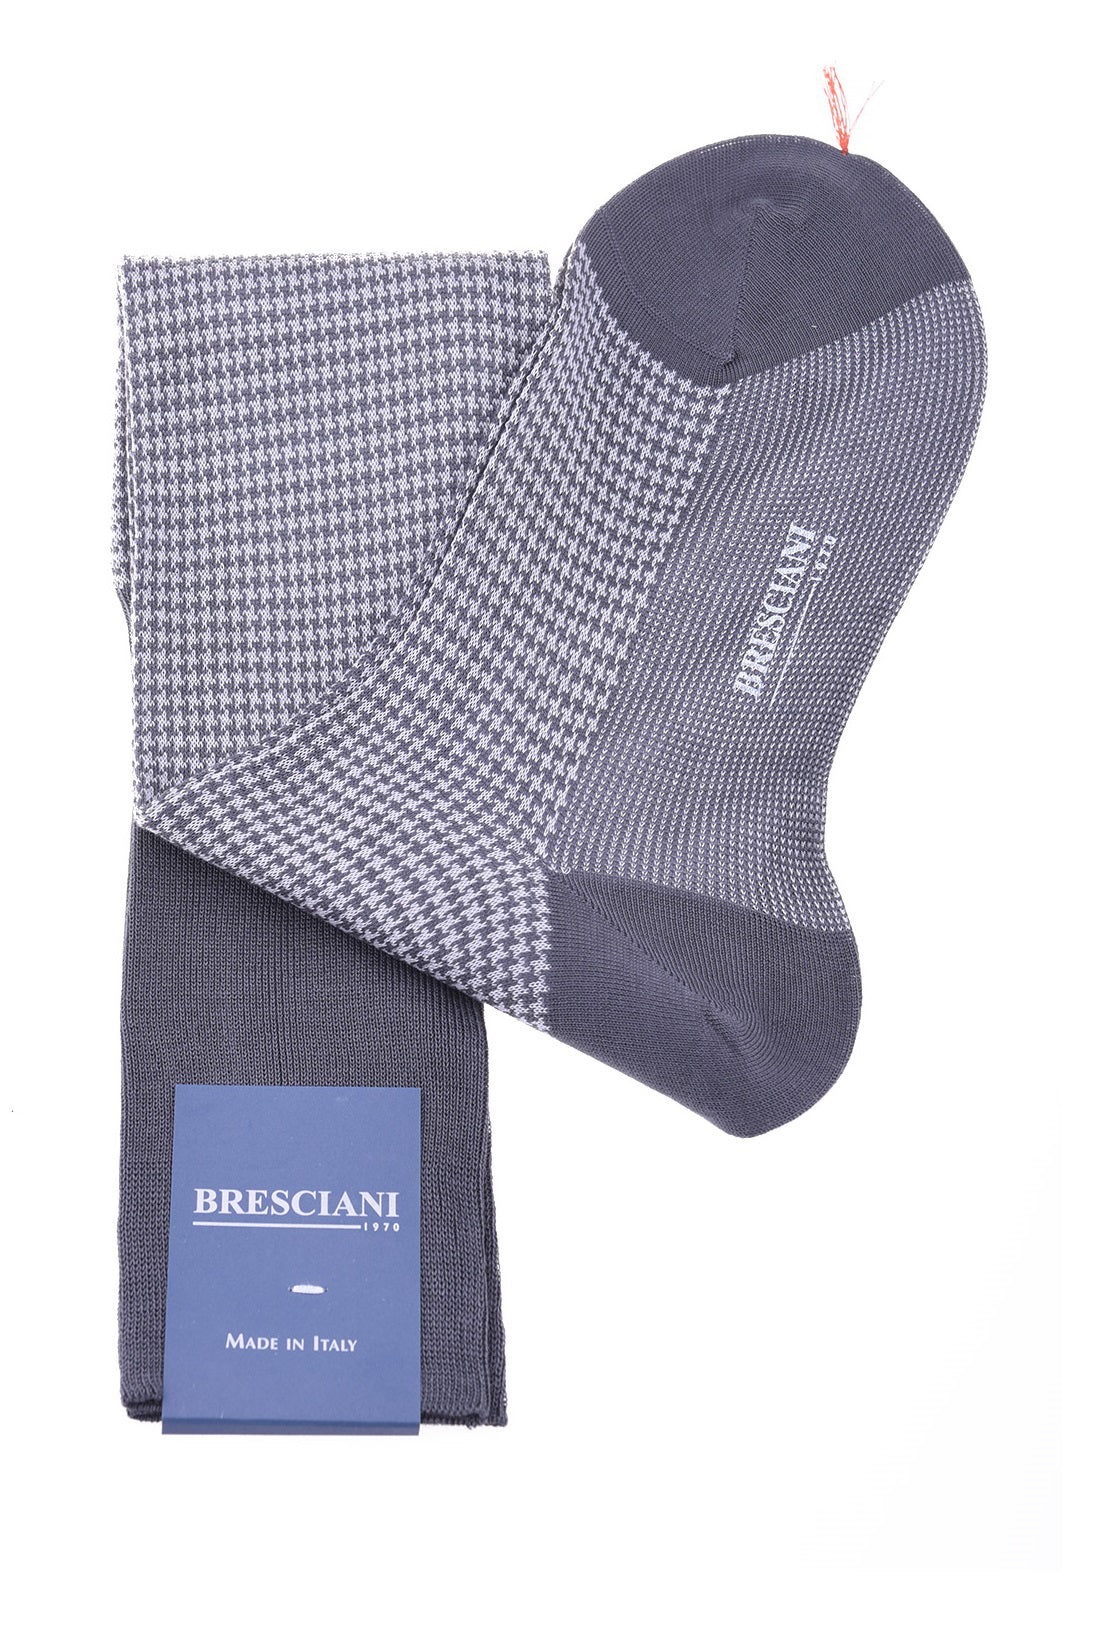 Bresciani Socks in Herringbone Cotton Knee Length | WJ & Co.